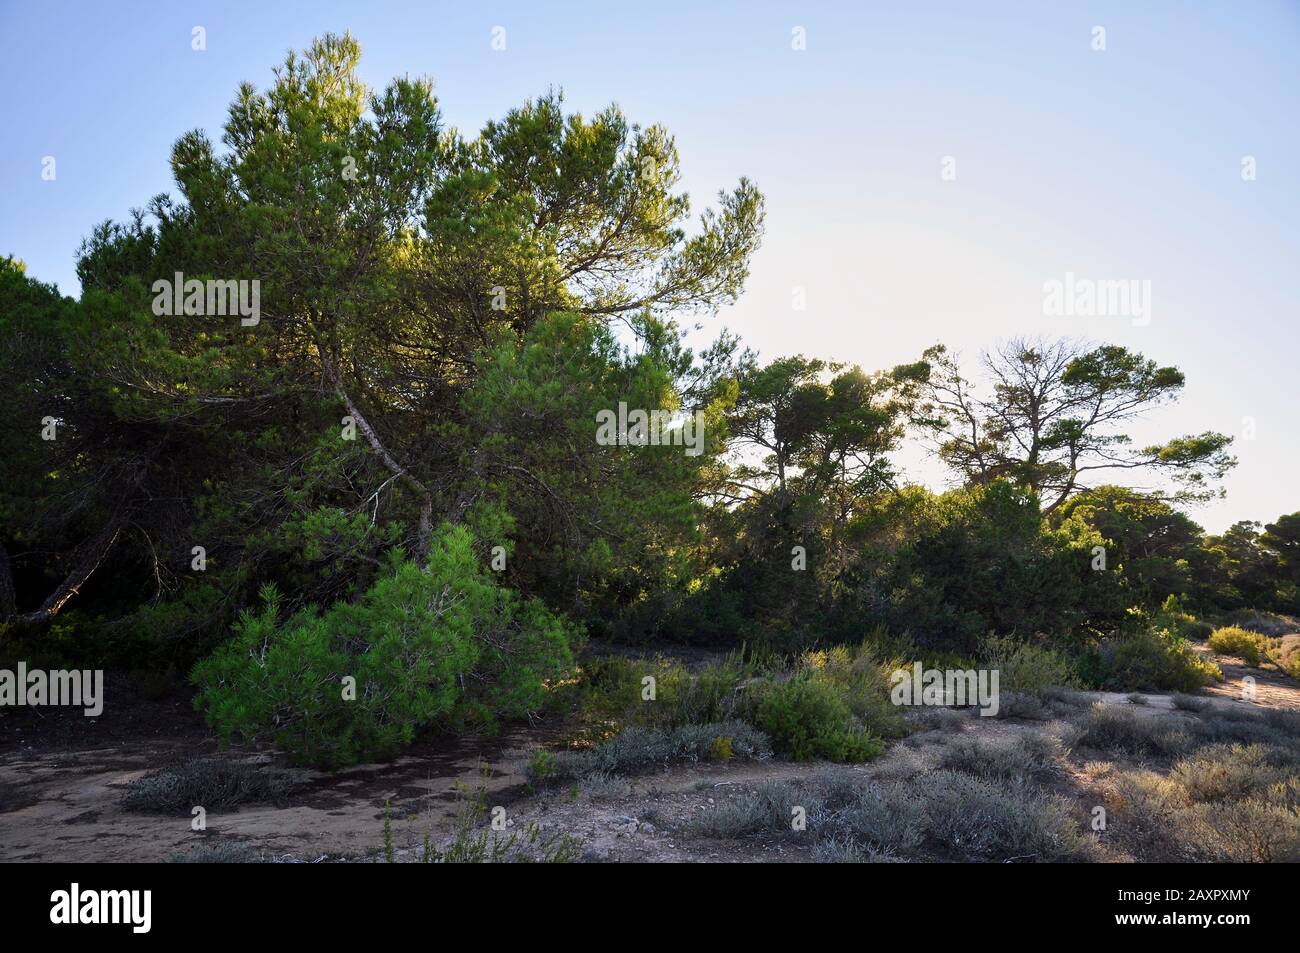 Aleppo pine (Pinus halepensis) in a typical Mediterranean landscape in Formentera countryside at sundown (Pityusic Islands, Balearic Islands, Spain) Stock Photo